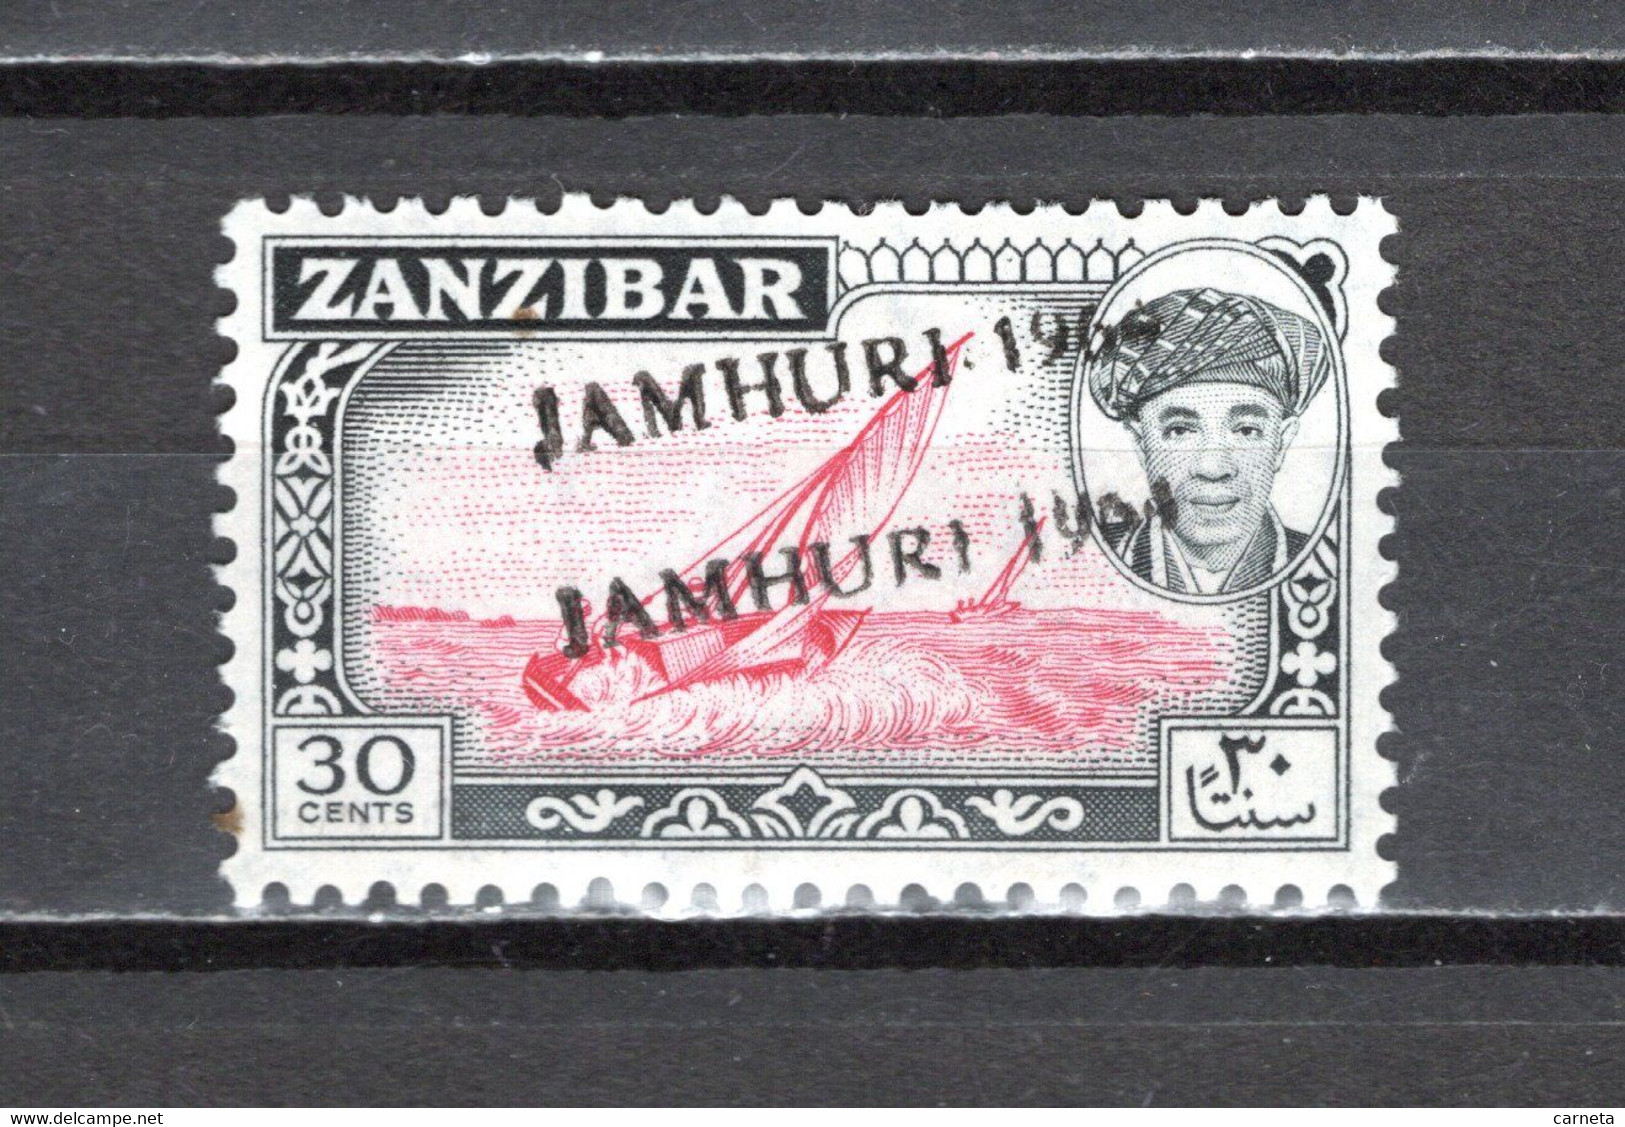 ZANZIBAR  N° 267 DOUBLE SURCHARGE   NEUF SANS CHARNIERE   COTE ? €   BATEAUX   VOIR DESCRIPTION - Zanzibar (1963-1968)